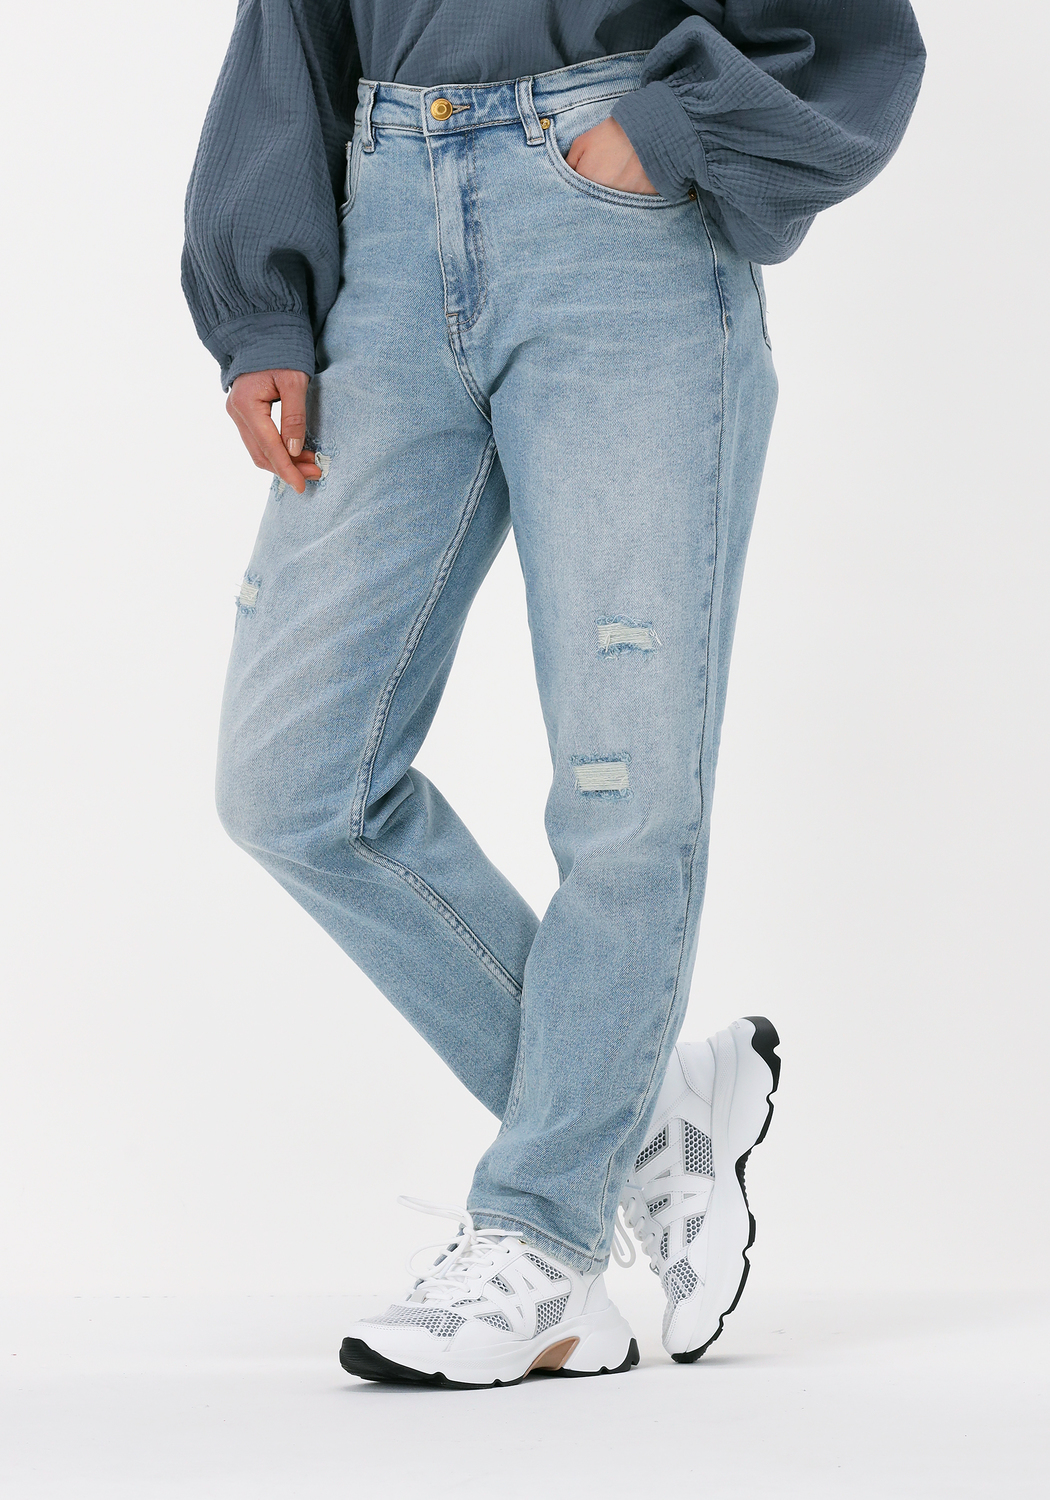 troosten glas Trechter webspin Blauwe CIRCLE OF TRUST Straight leg jeans SCOTTIE DNM | Omoda